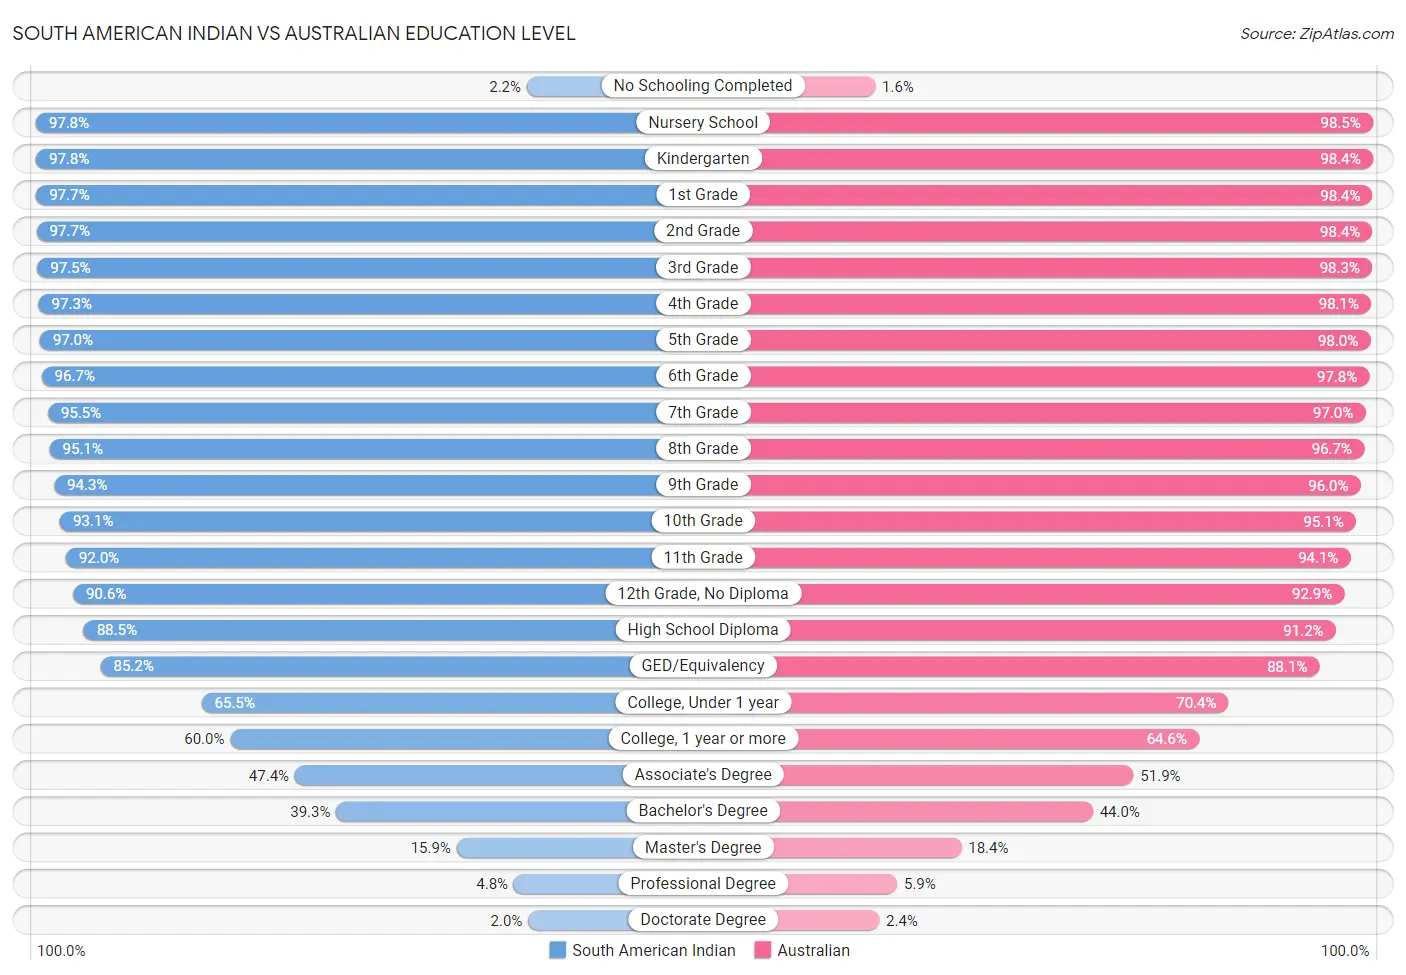 South American Indian vs Australian Education Level